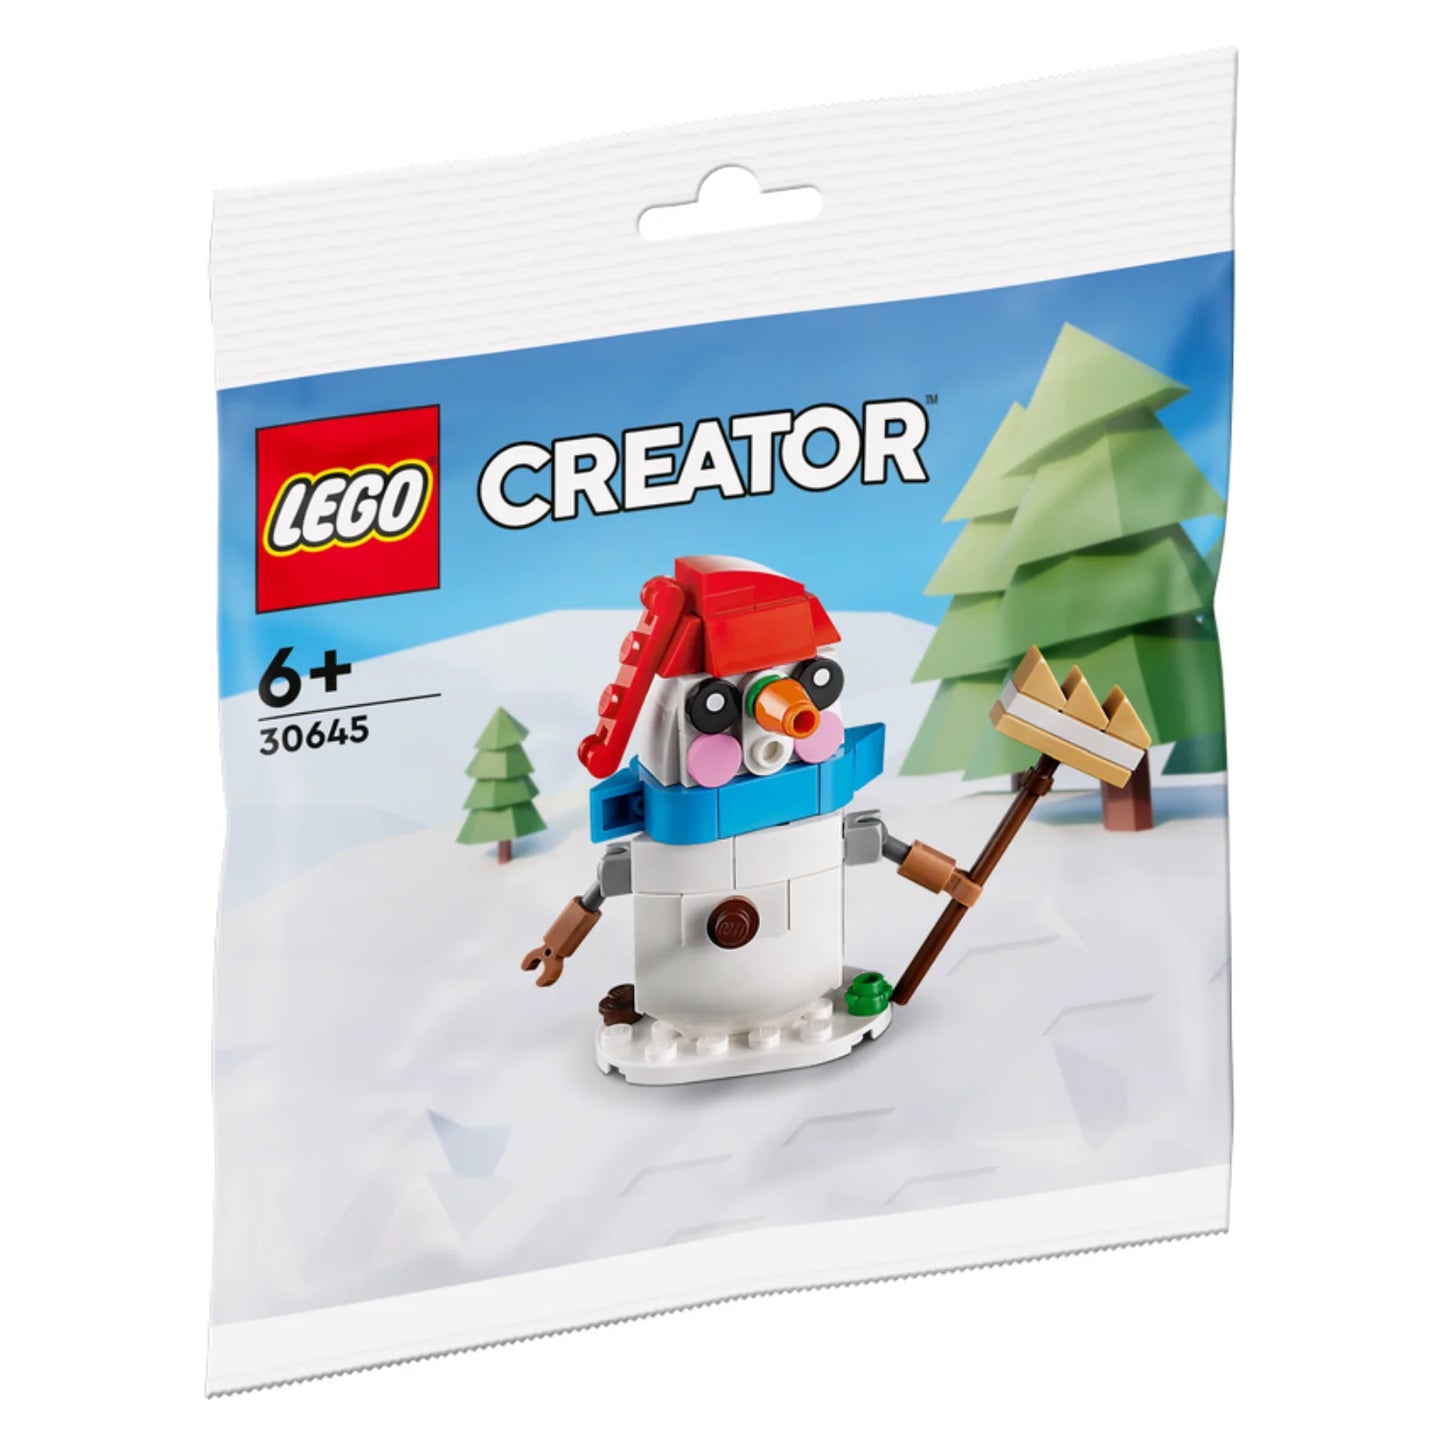 Lego Creator Snowman 30645 Polybag